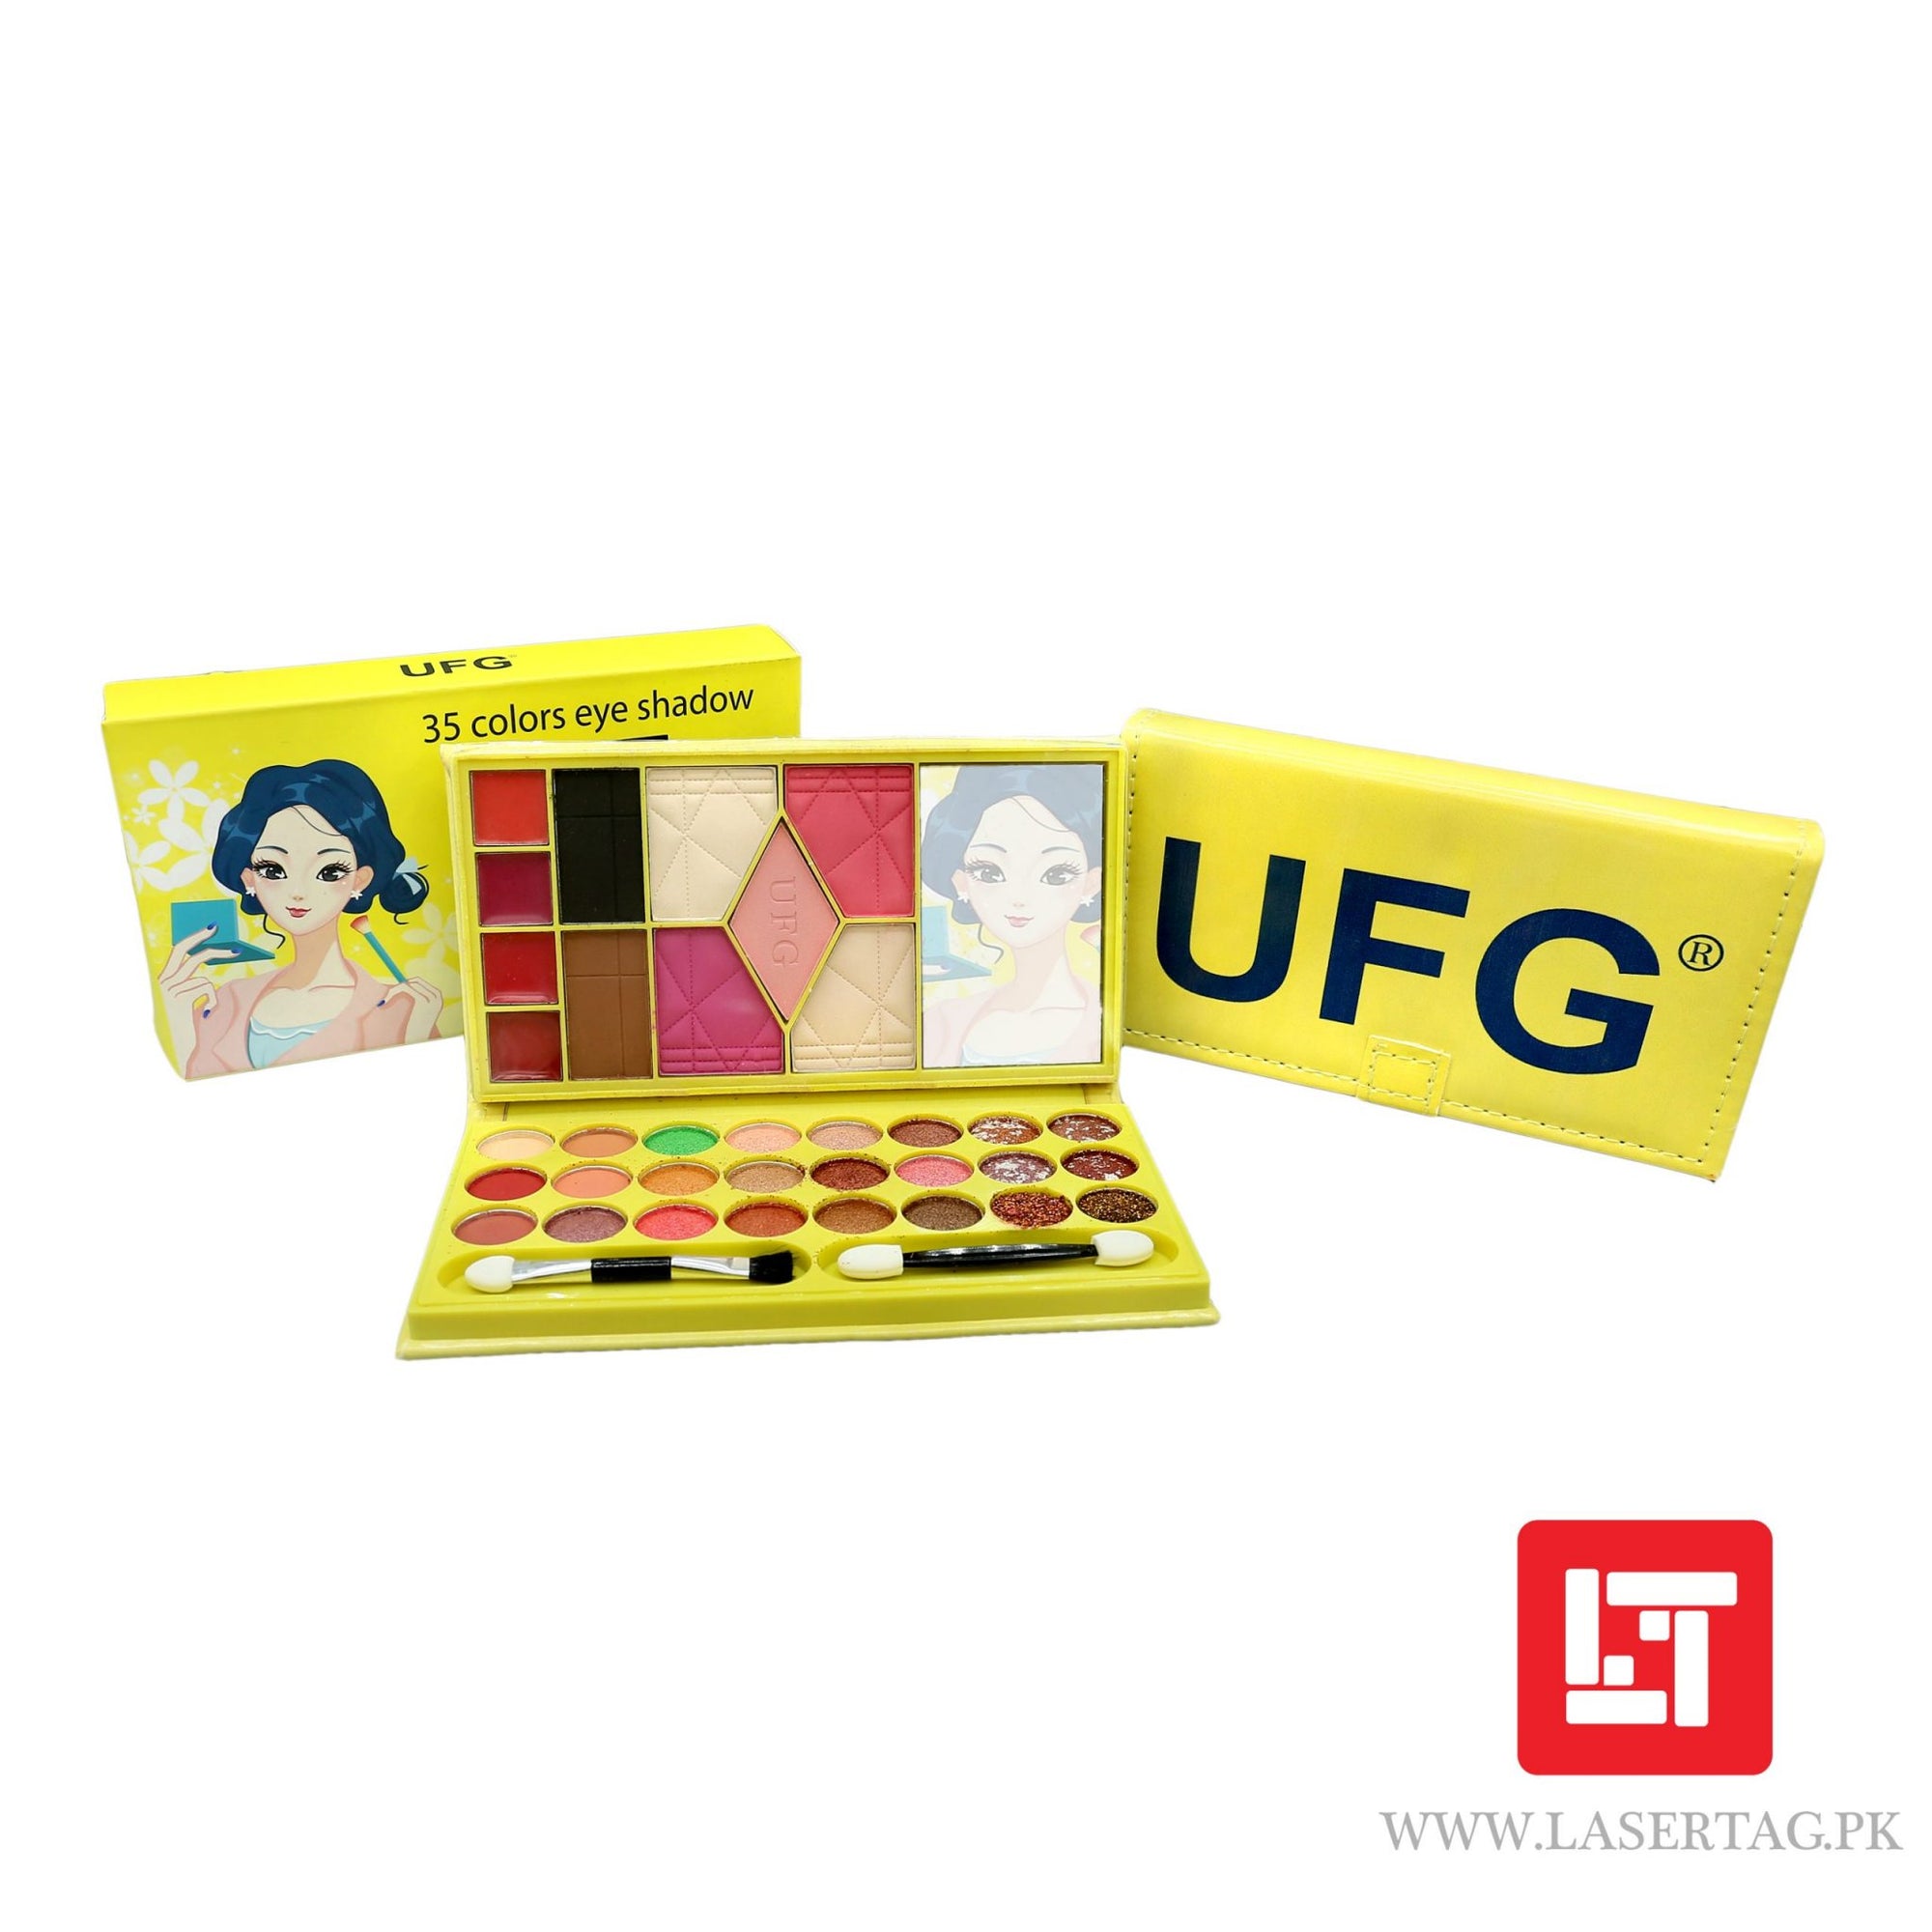 Miss Rose UFG 35 Colors Eyeshadow Palette freeshipping - lasertag.pk